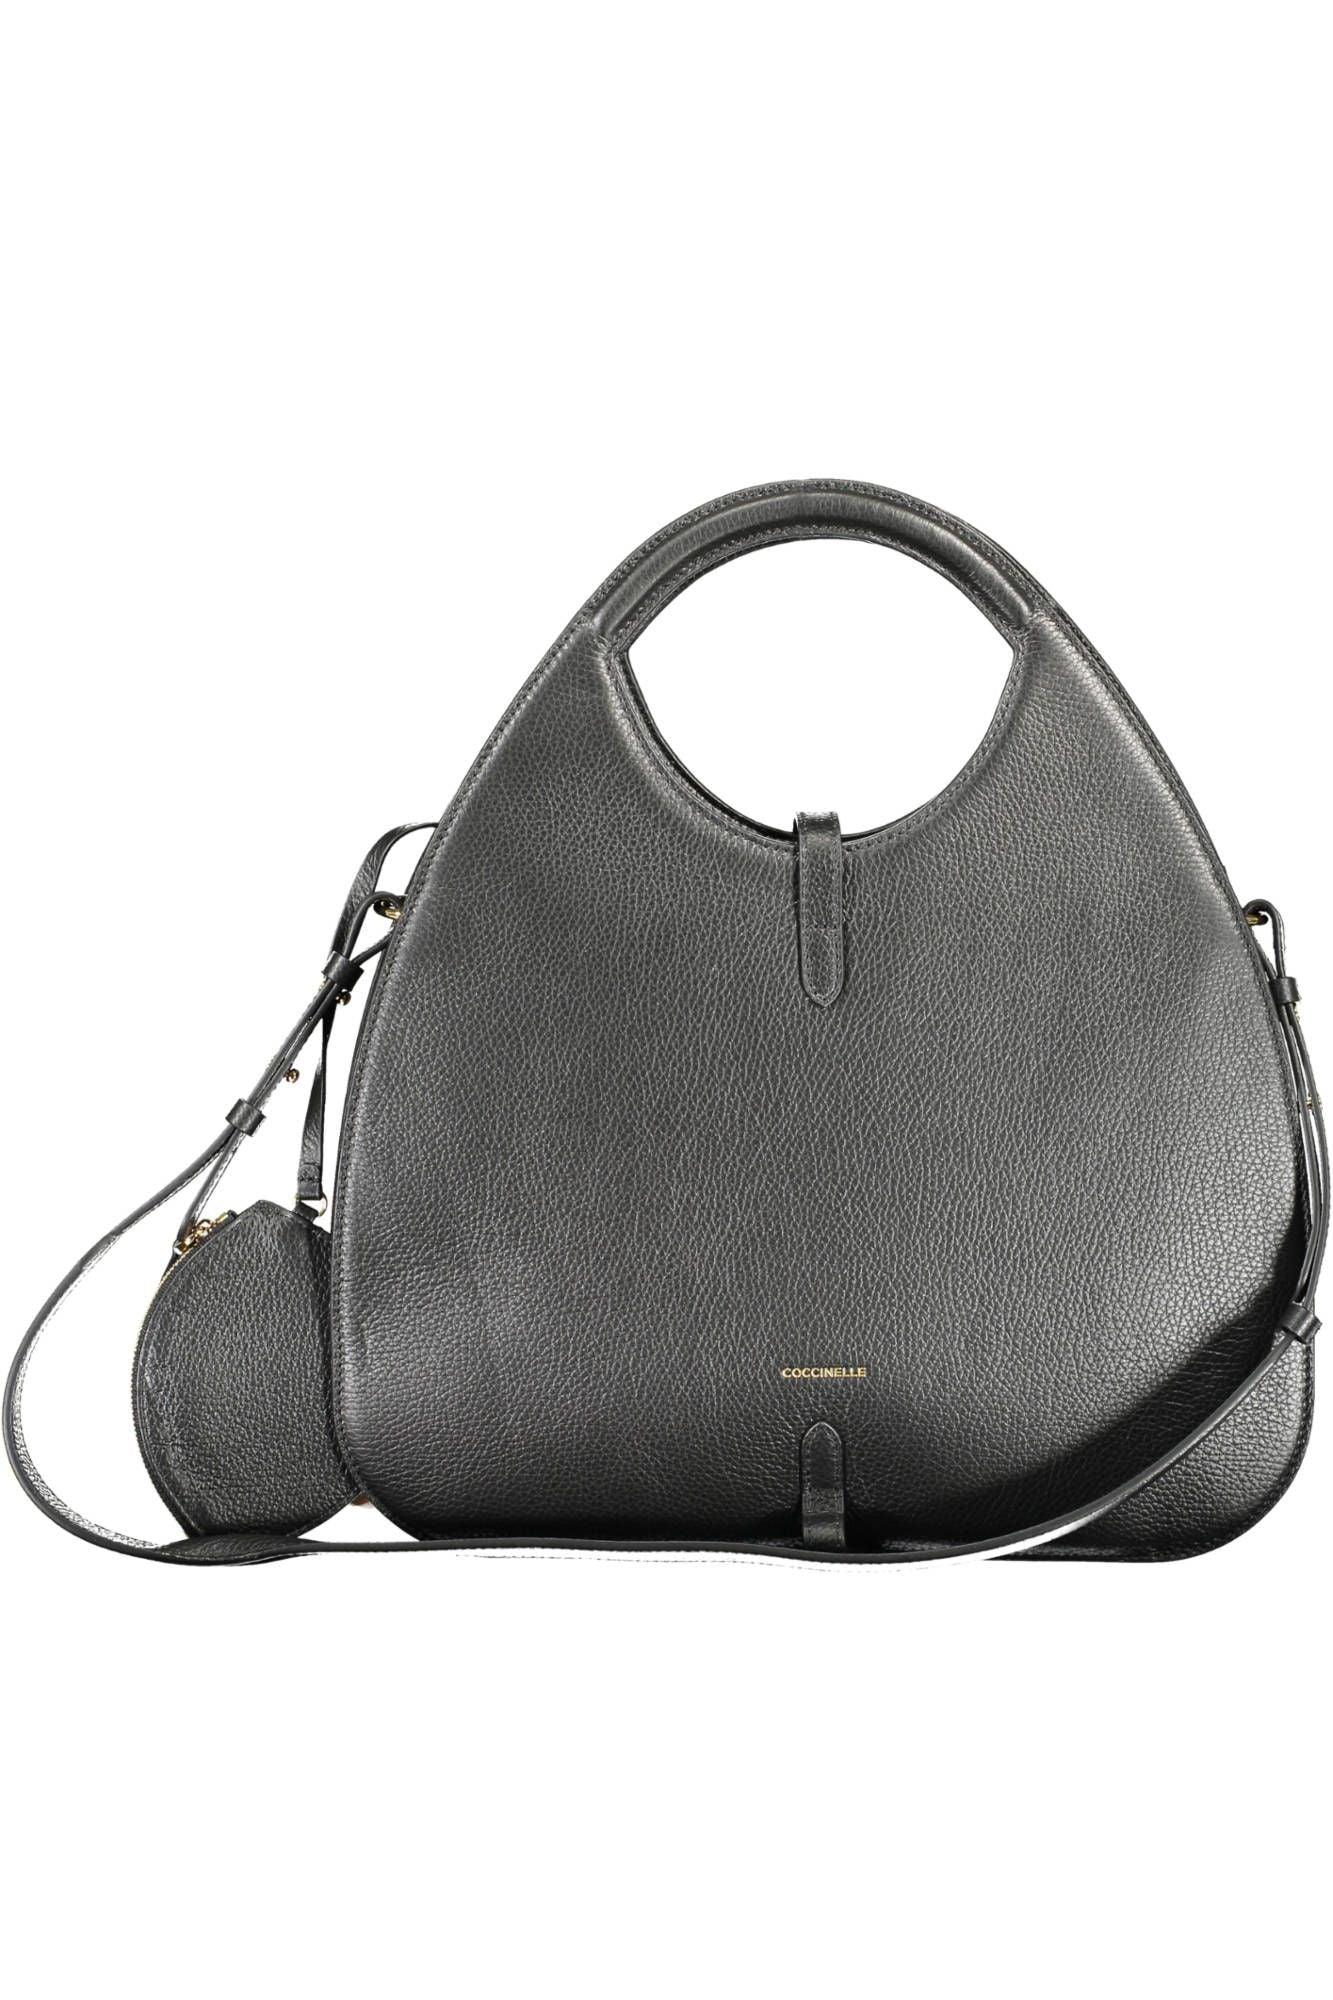 Coccinelle Elegant Black Leather Handbag with Removable Strap - PER.FASHION